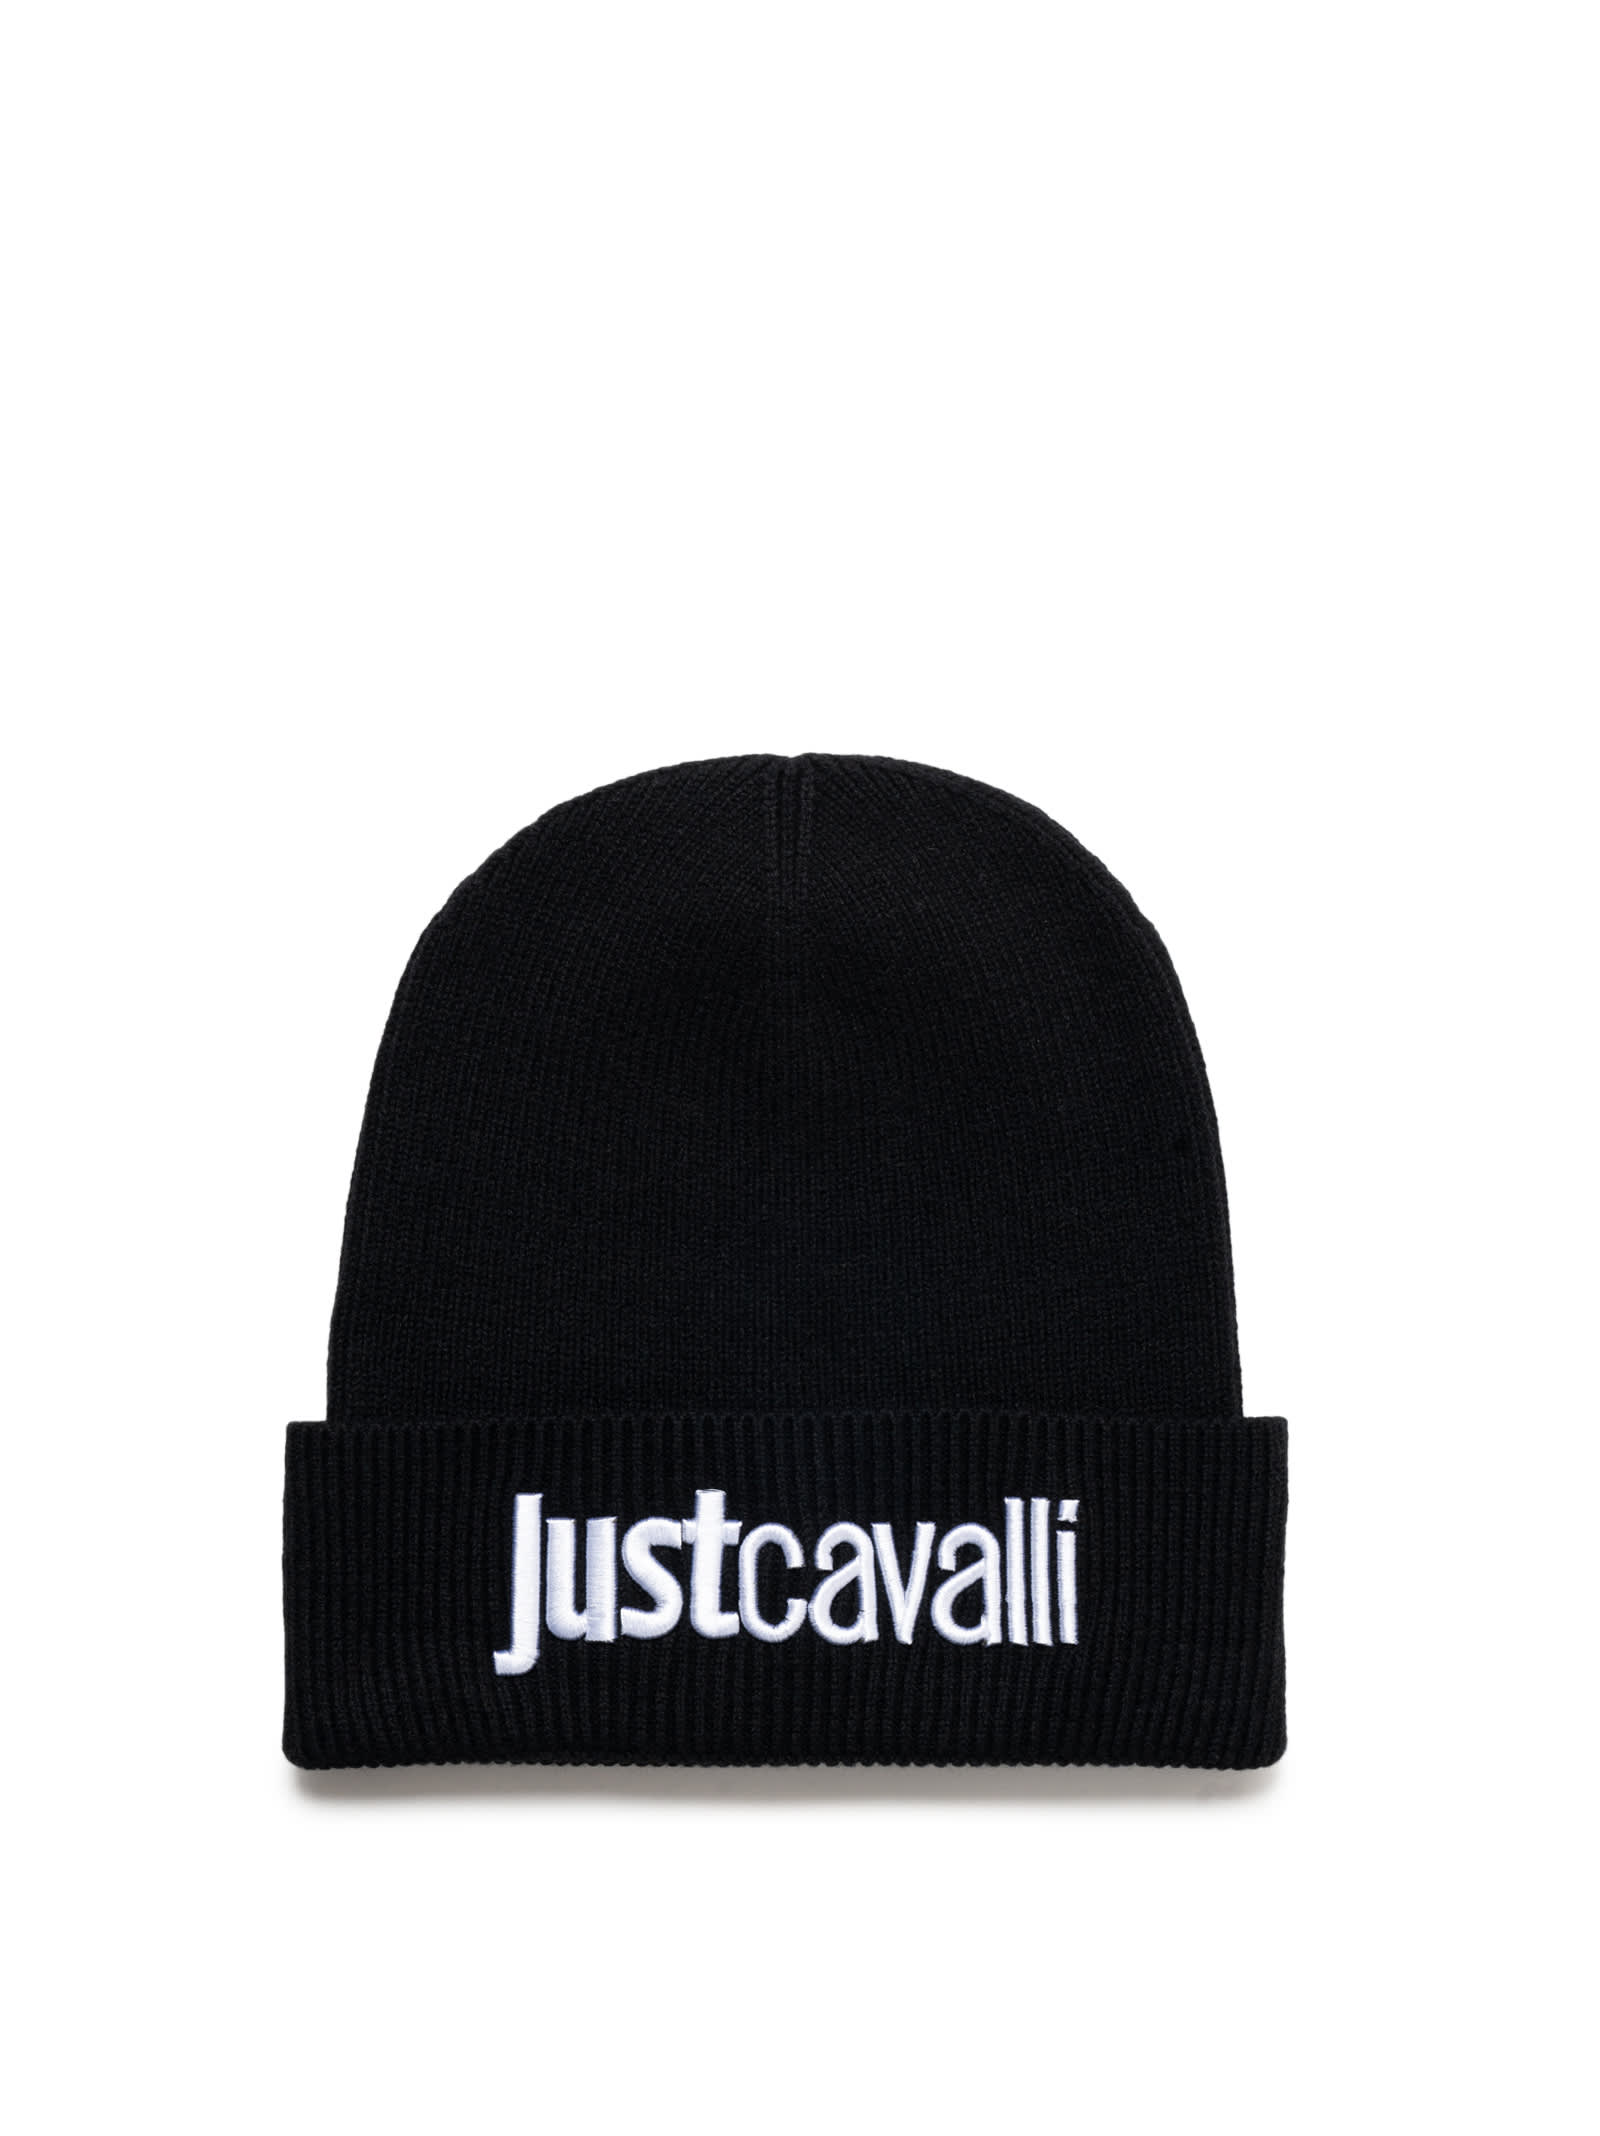 Just Cavalli Hat In Black/white